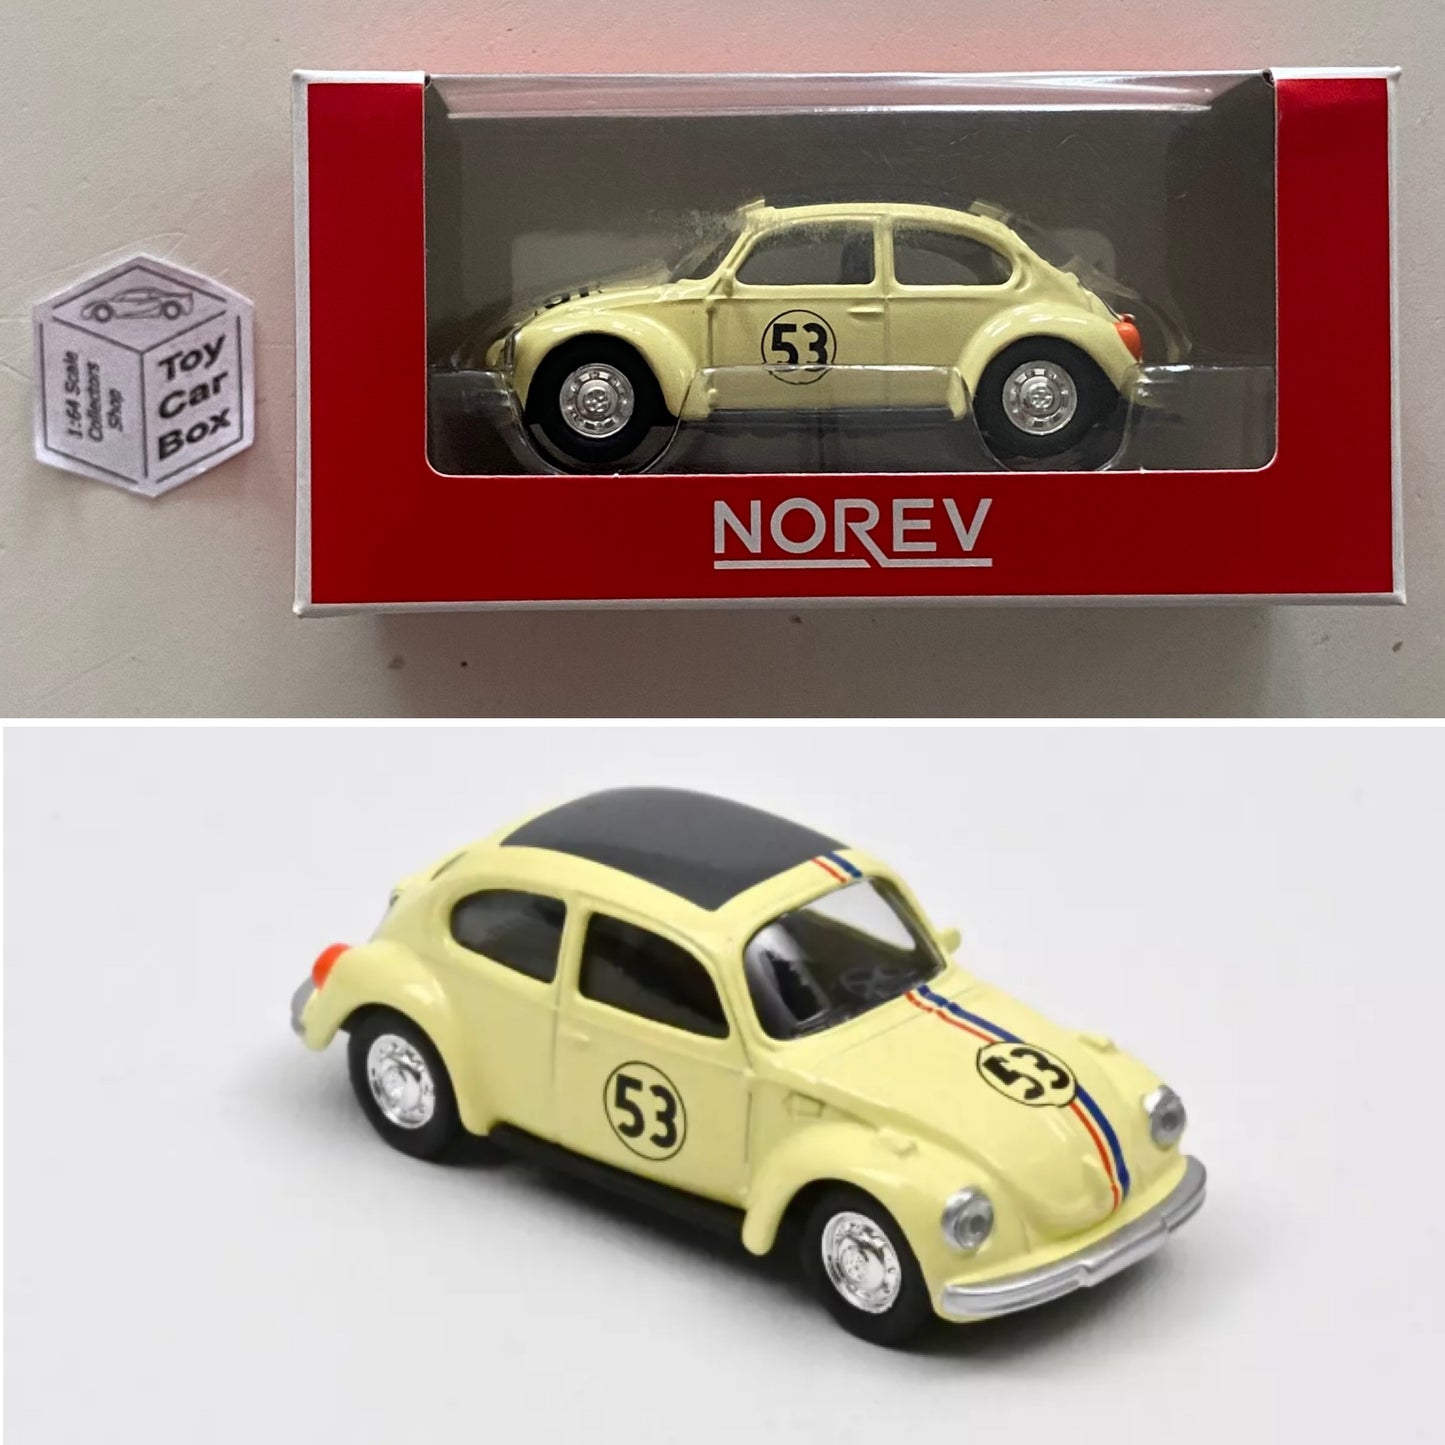 NOREV 1:64 Scale* - 1973 VW Volkswagen Beetle 1303 (Beige No.53 - Boxed) G27g